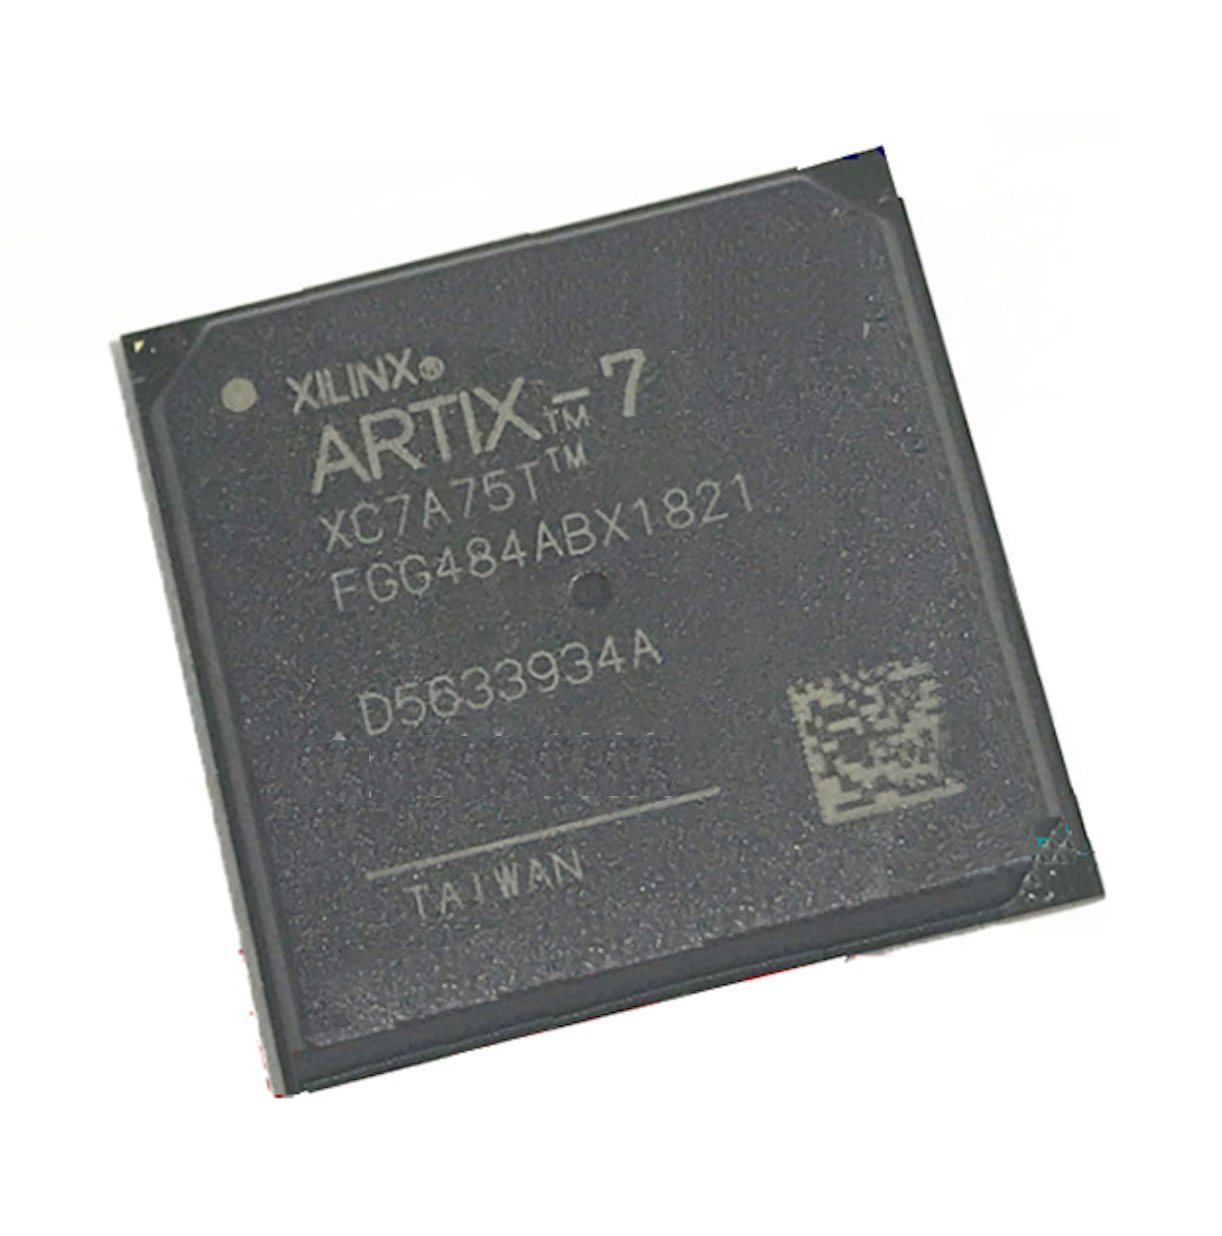 XC7A75T-1FGG484C